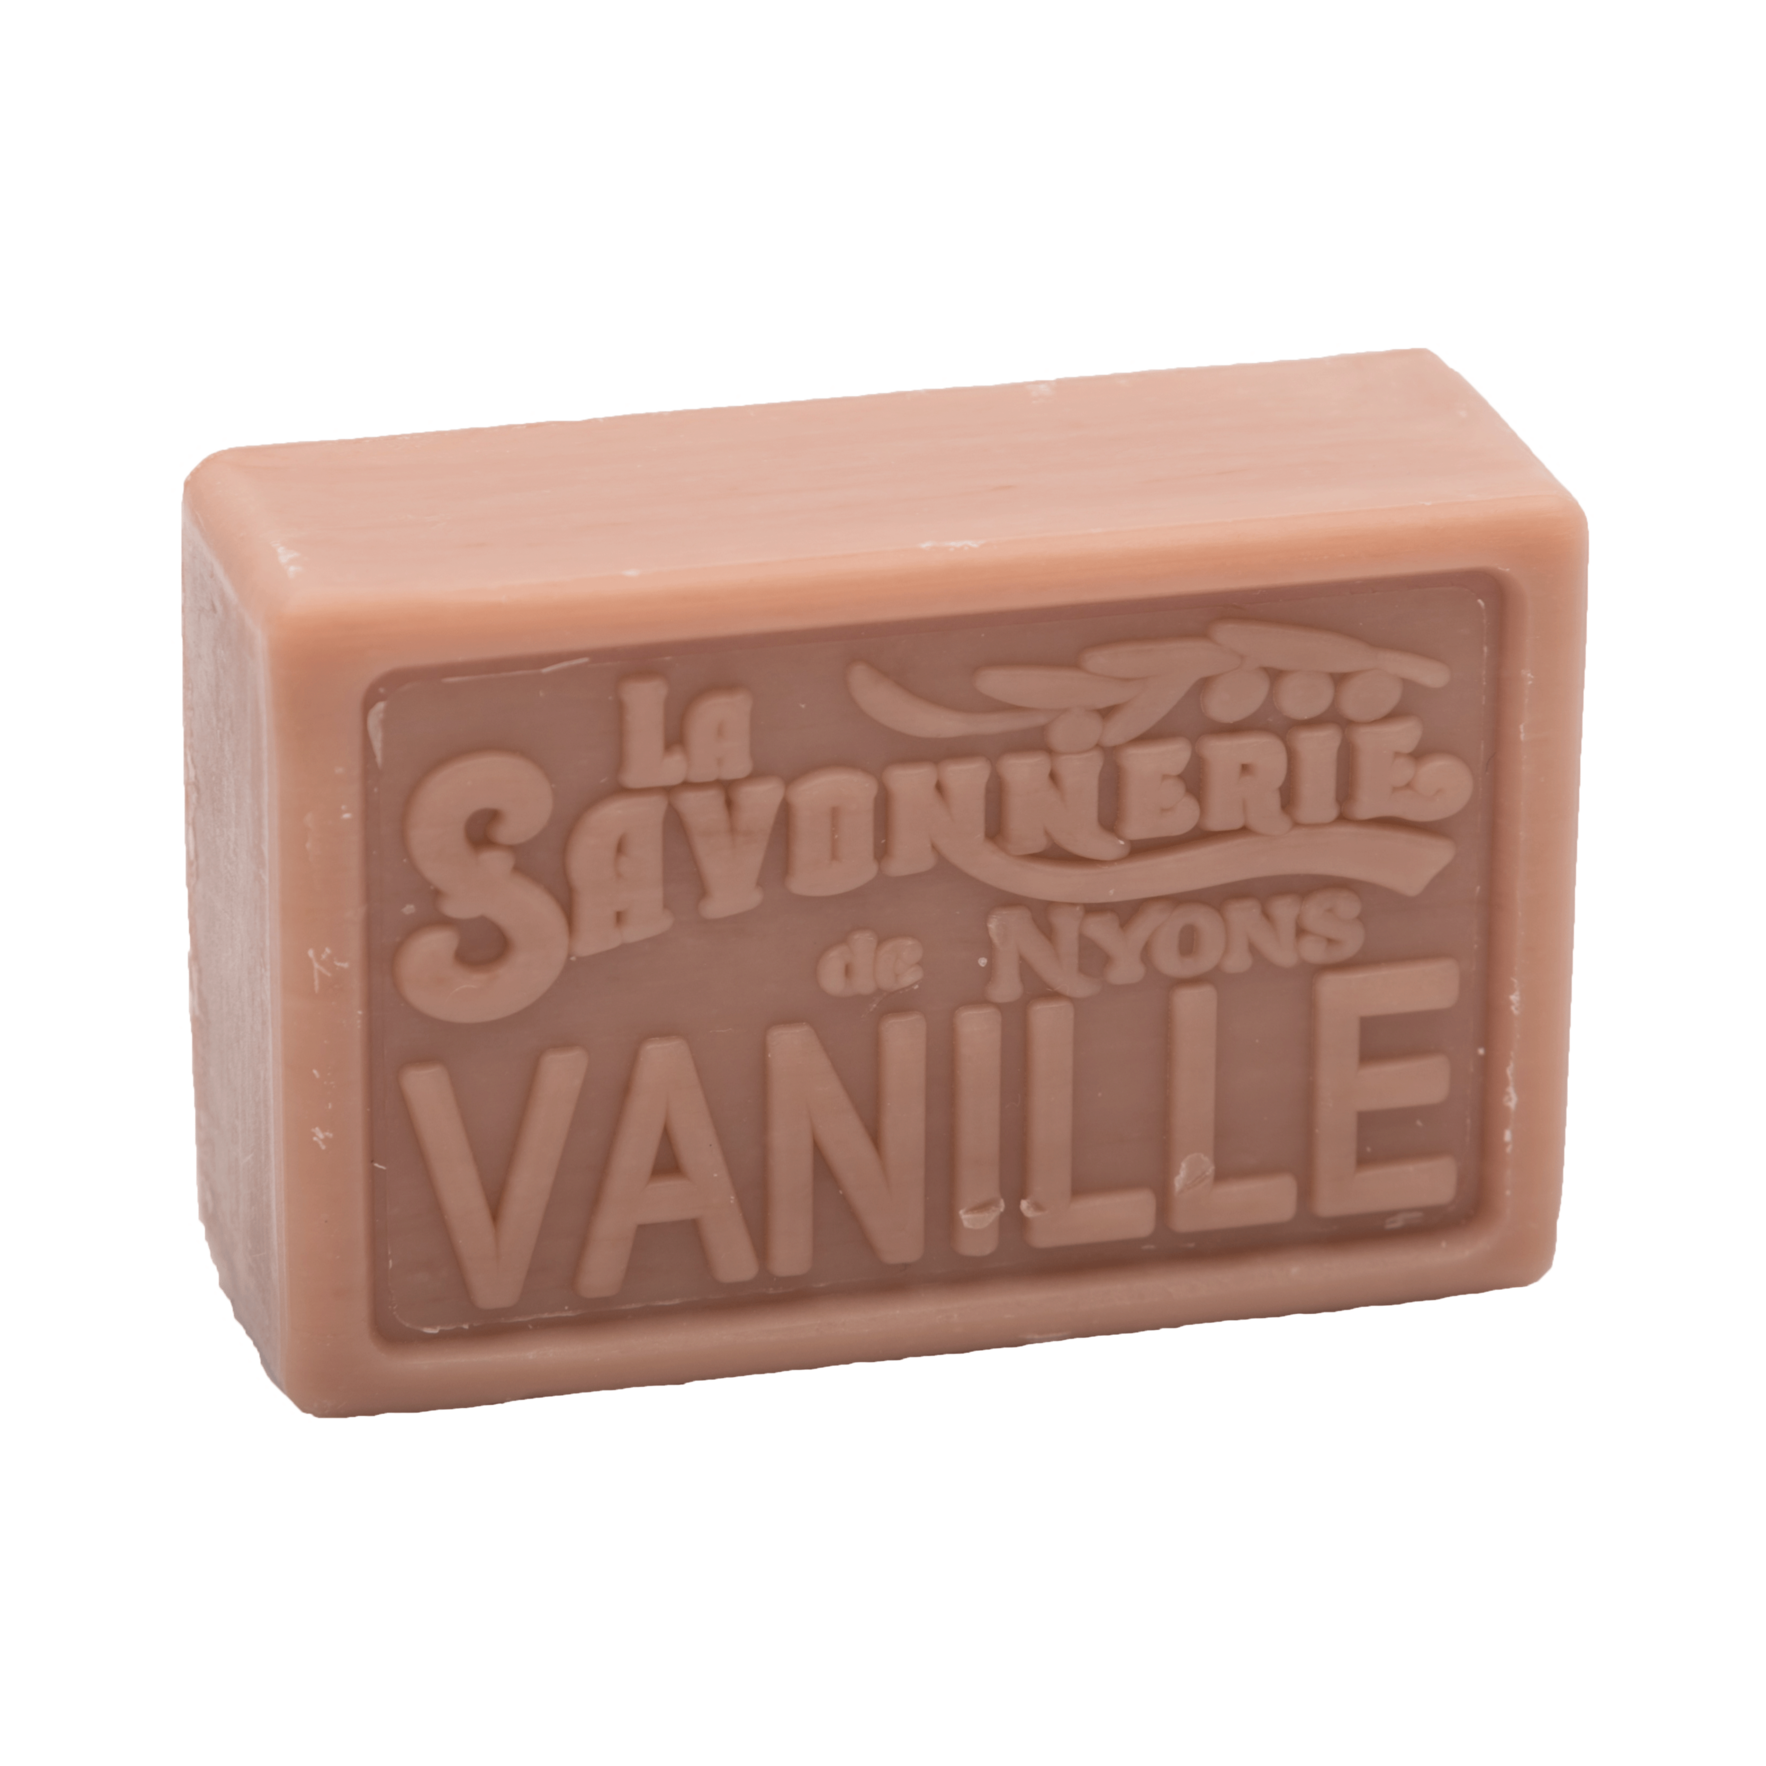 Reddish bar of soap reading La Savonnerie de Nyons Vanille.